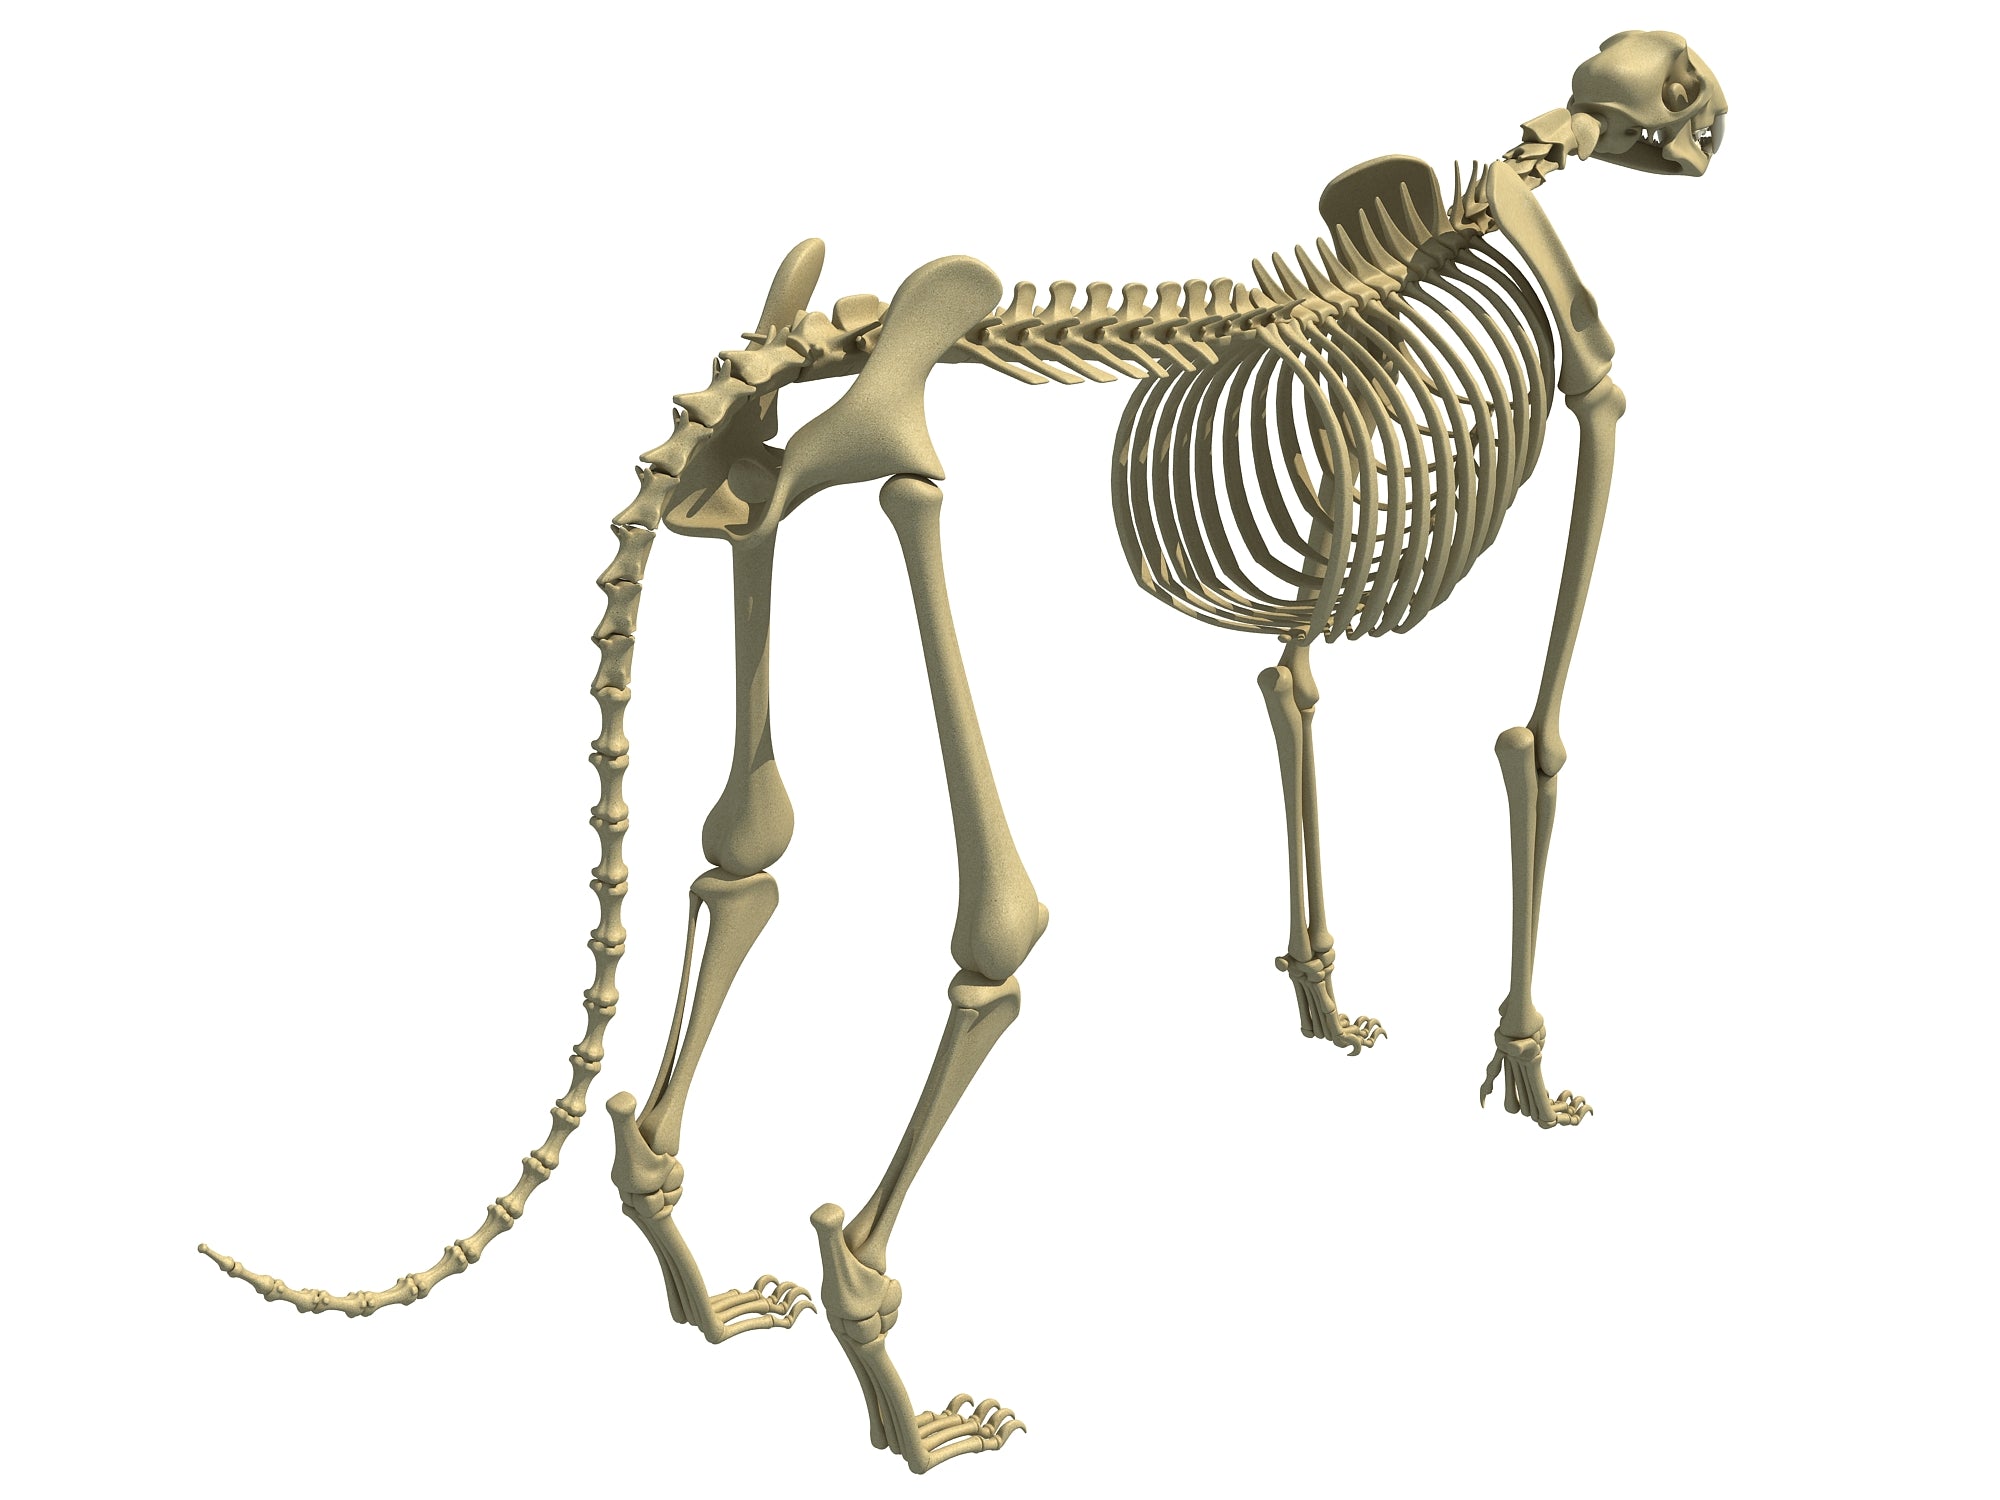 american cheetah skeleton